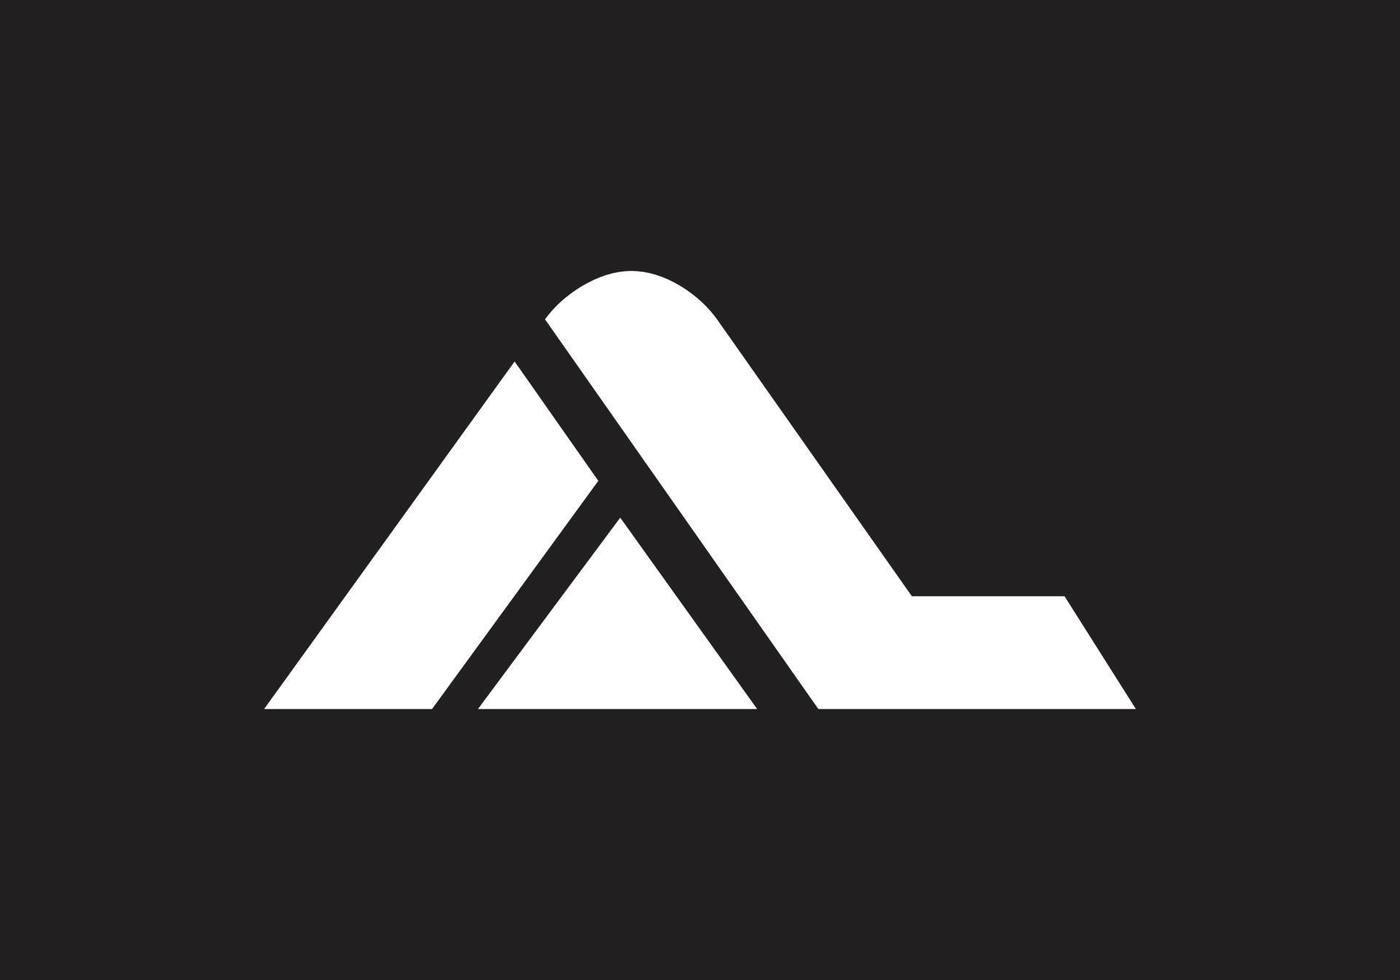 Letter AL logo creative modern design vector image